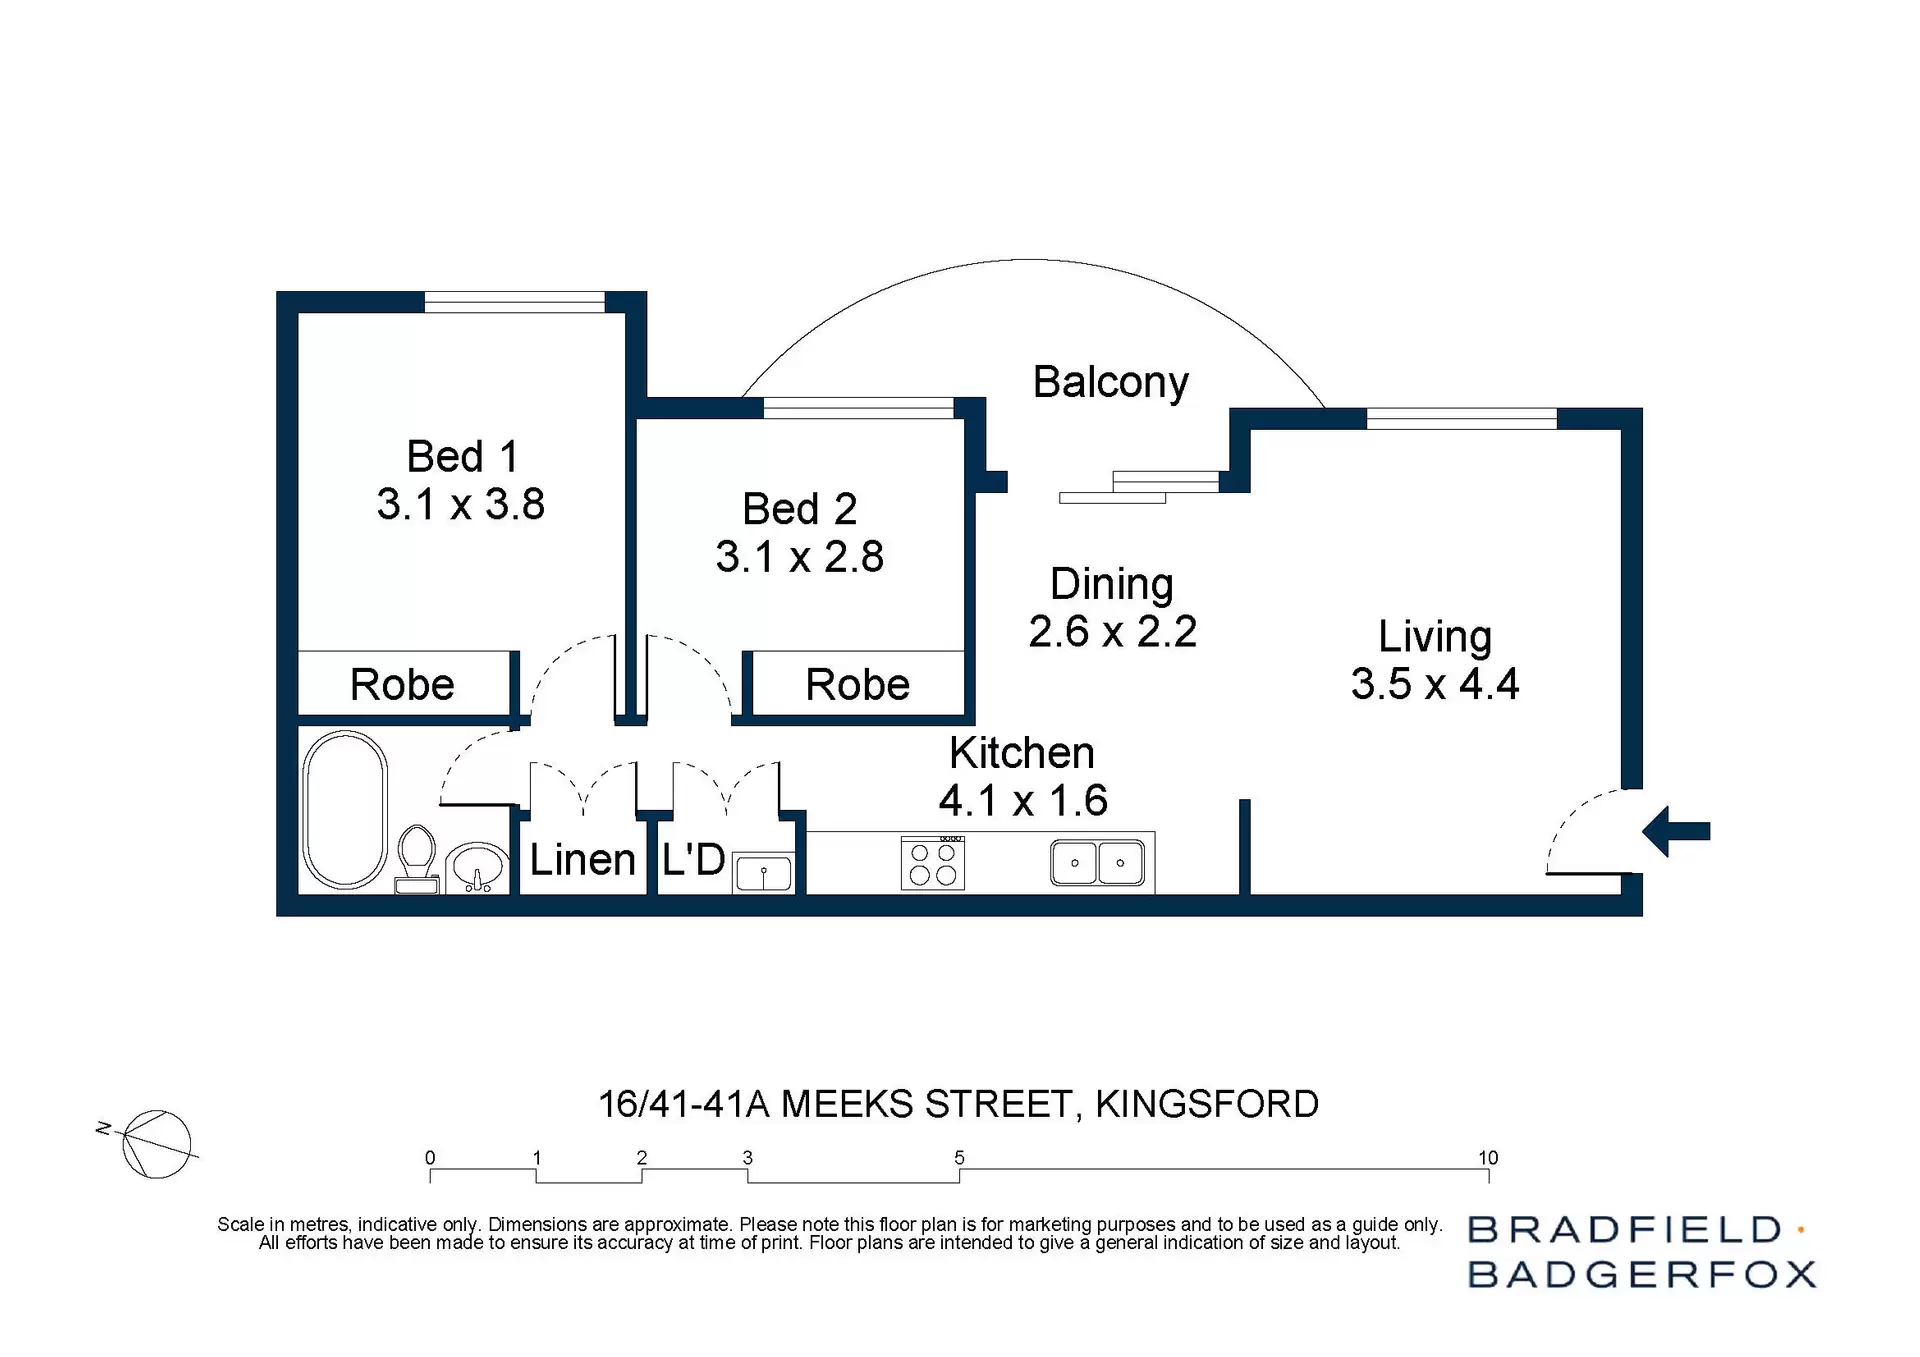 16/41-41a Meeks Street, Kingsford For Sale by Bradfield Badgerfox - image 1